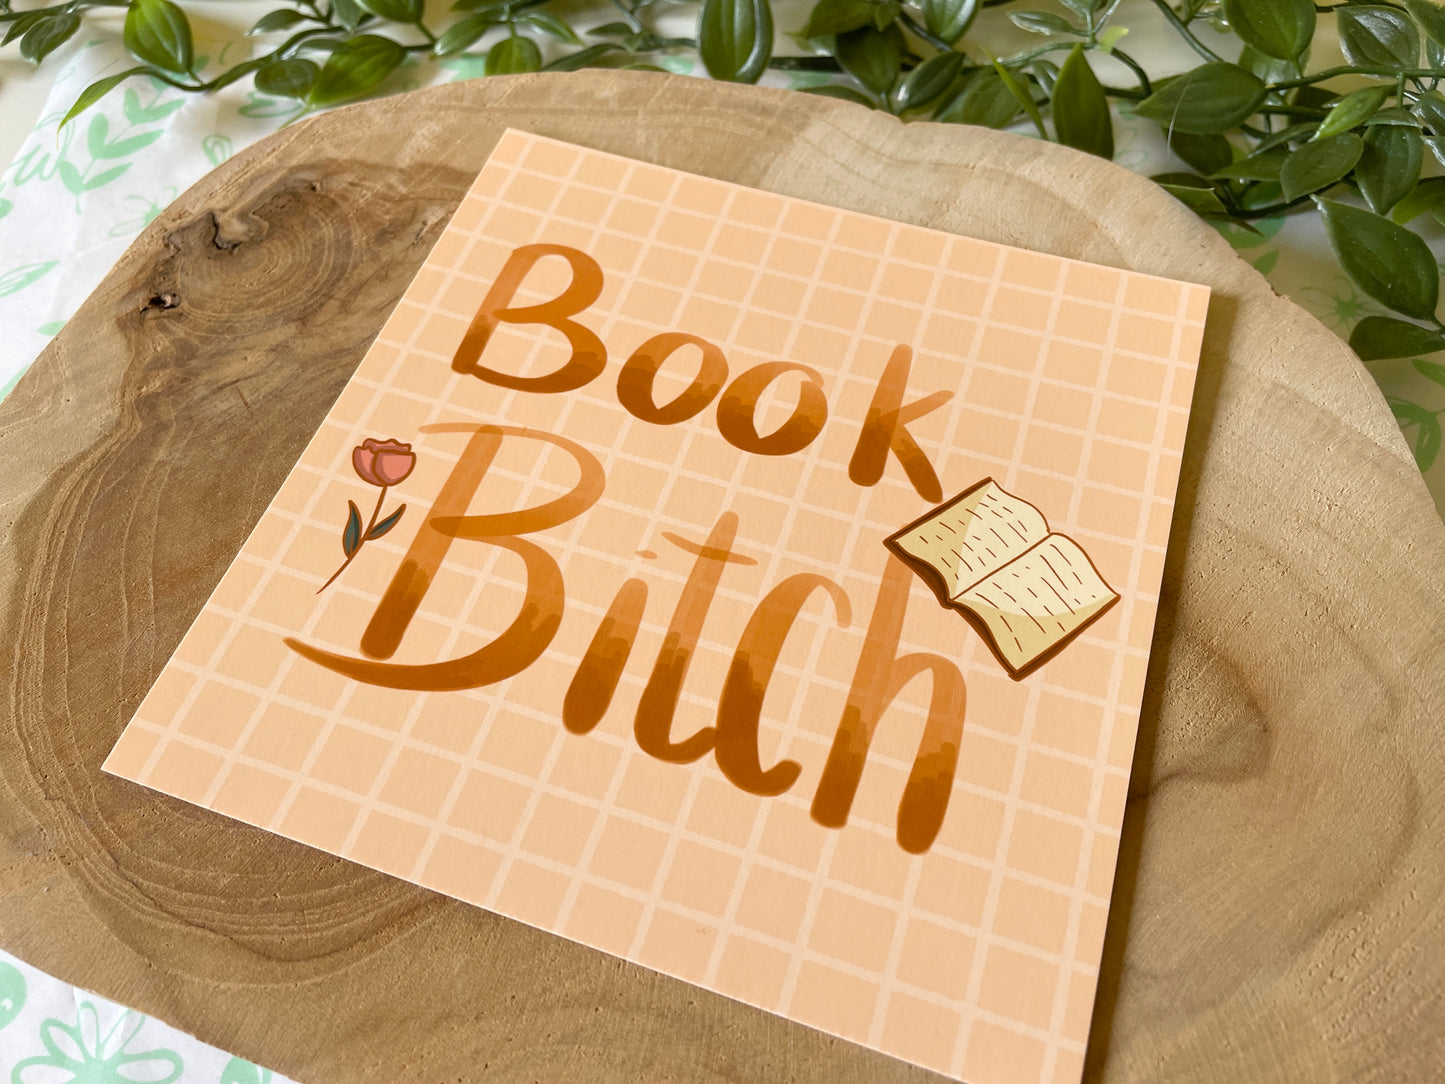 Book Bitch Quadratischer Druck